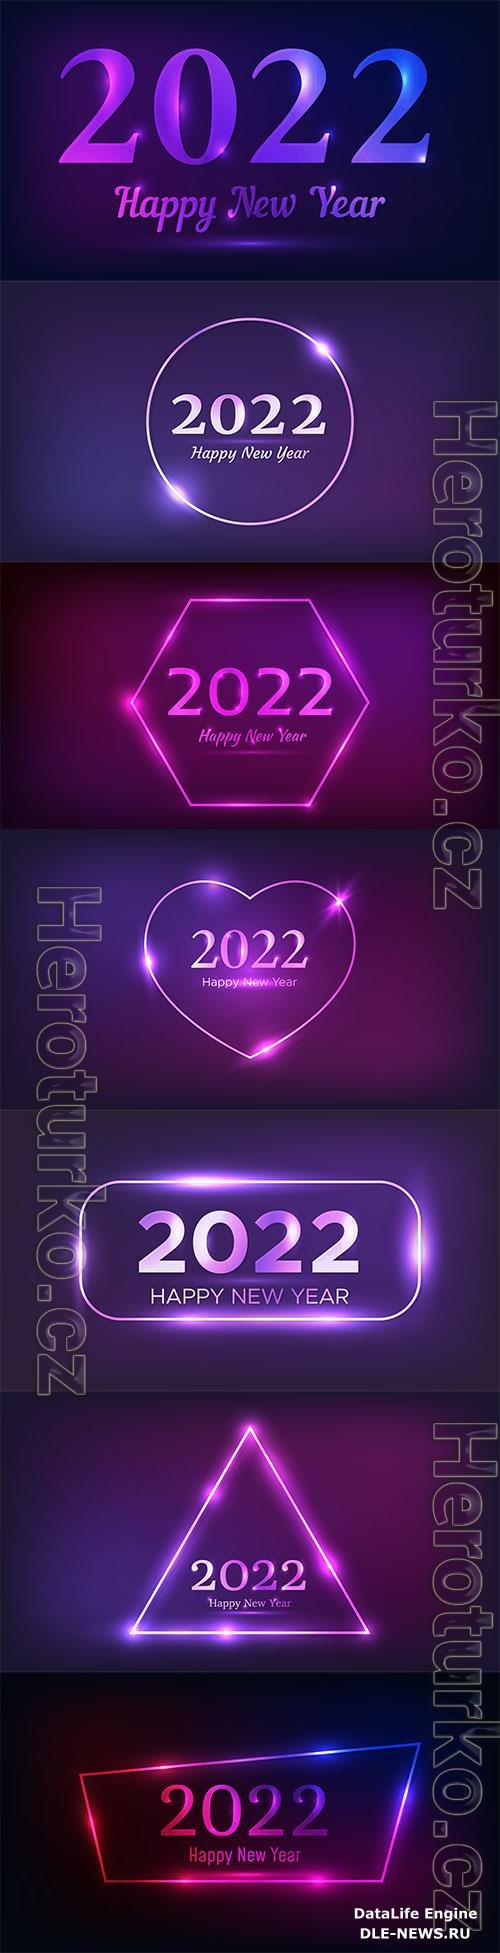 2022 happy new year neon vector background